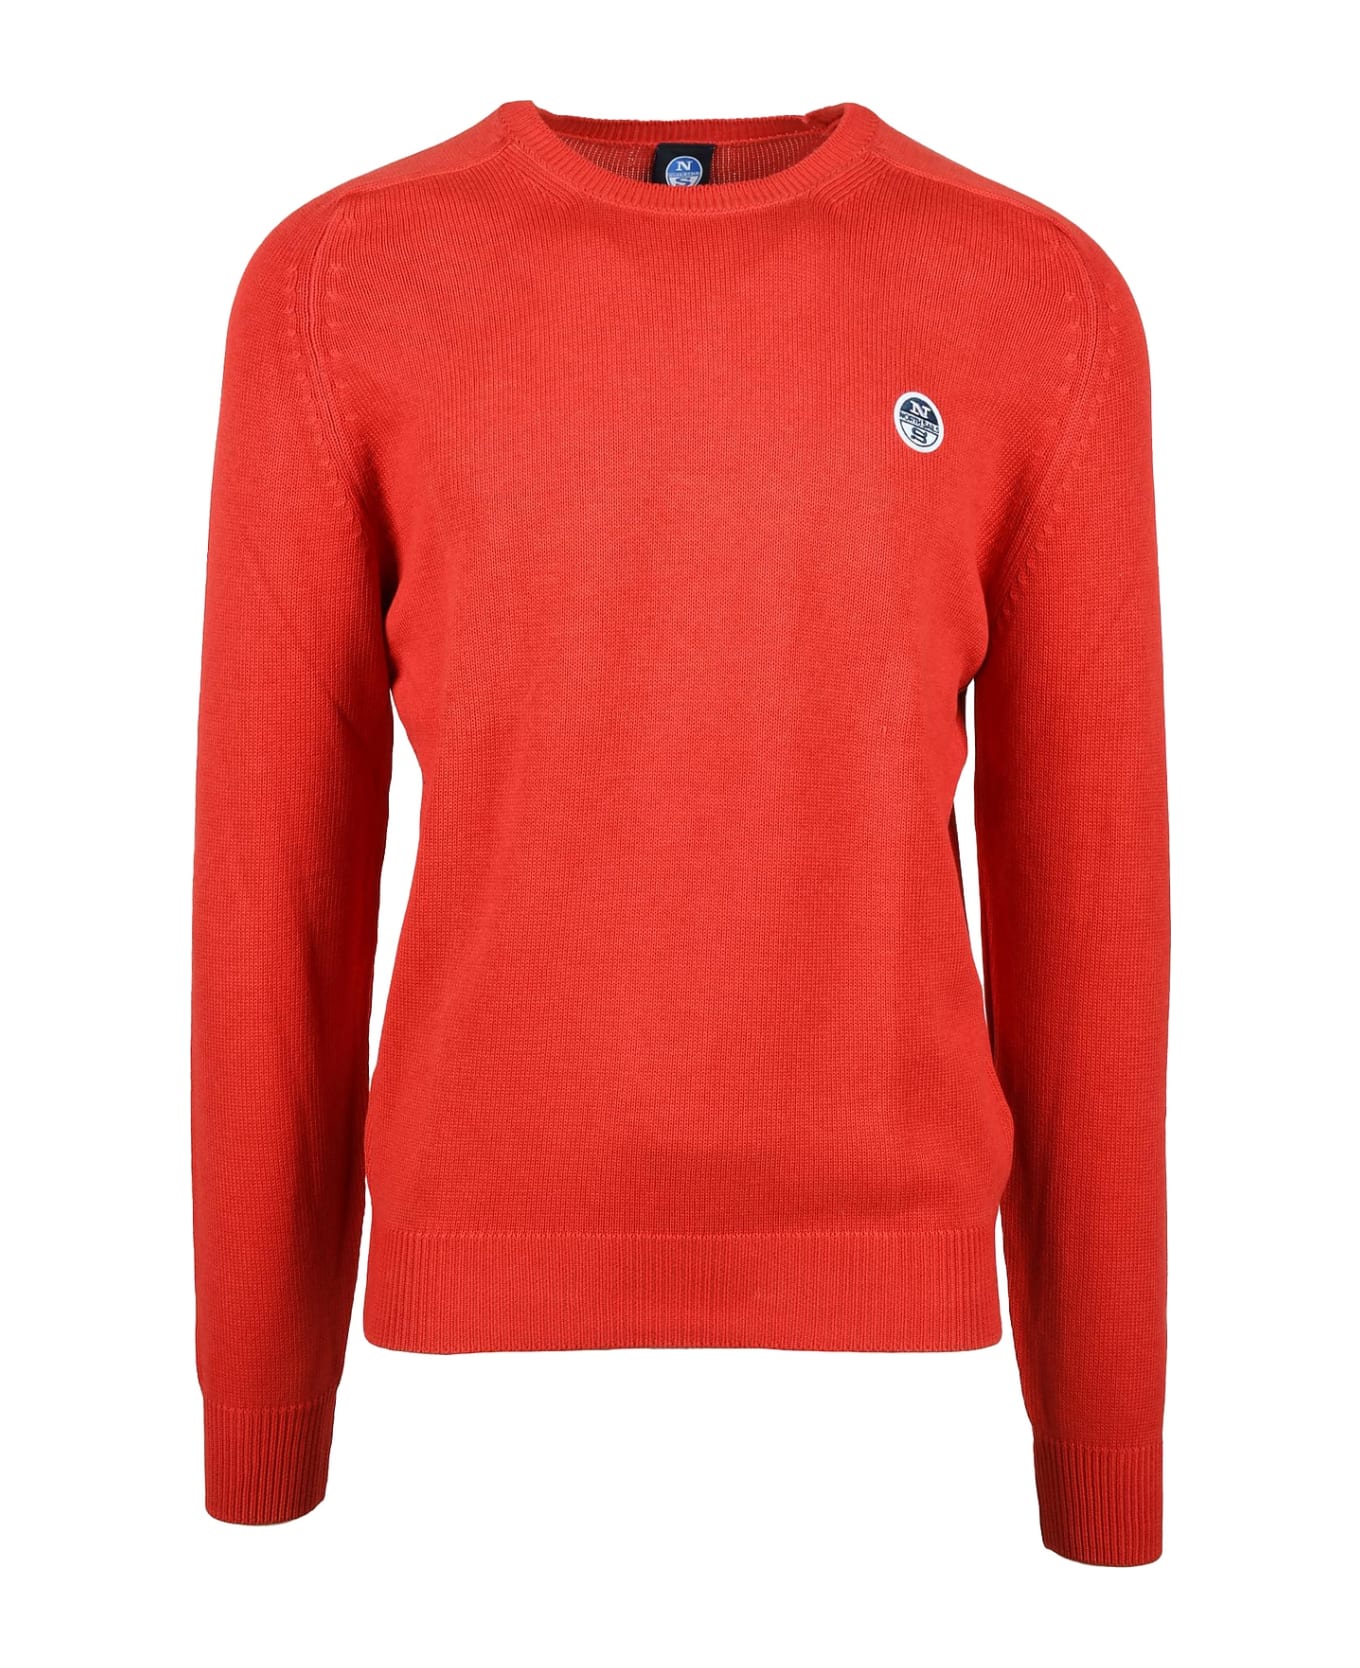 North Sails Men's Brick Sweater - Red